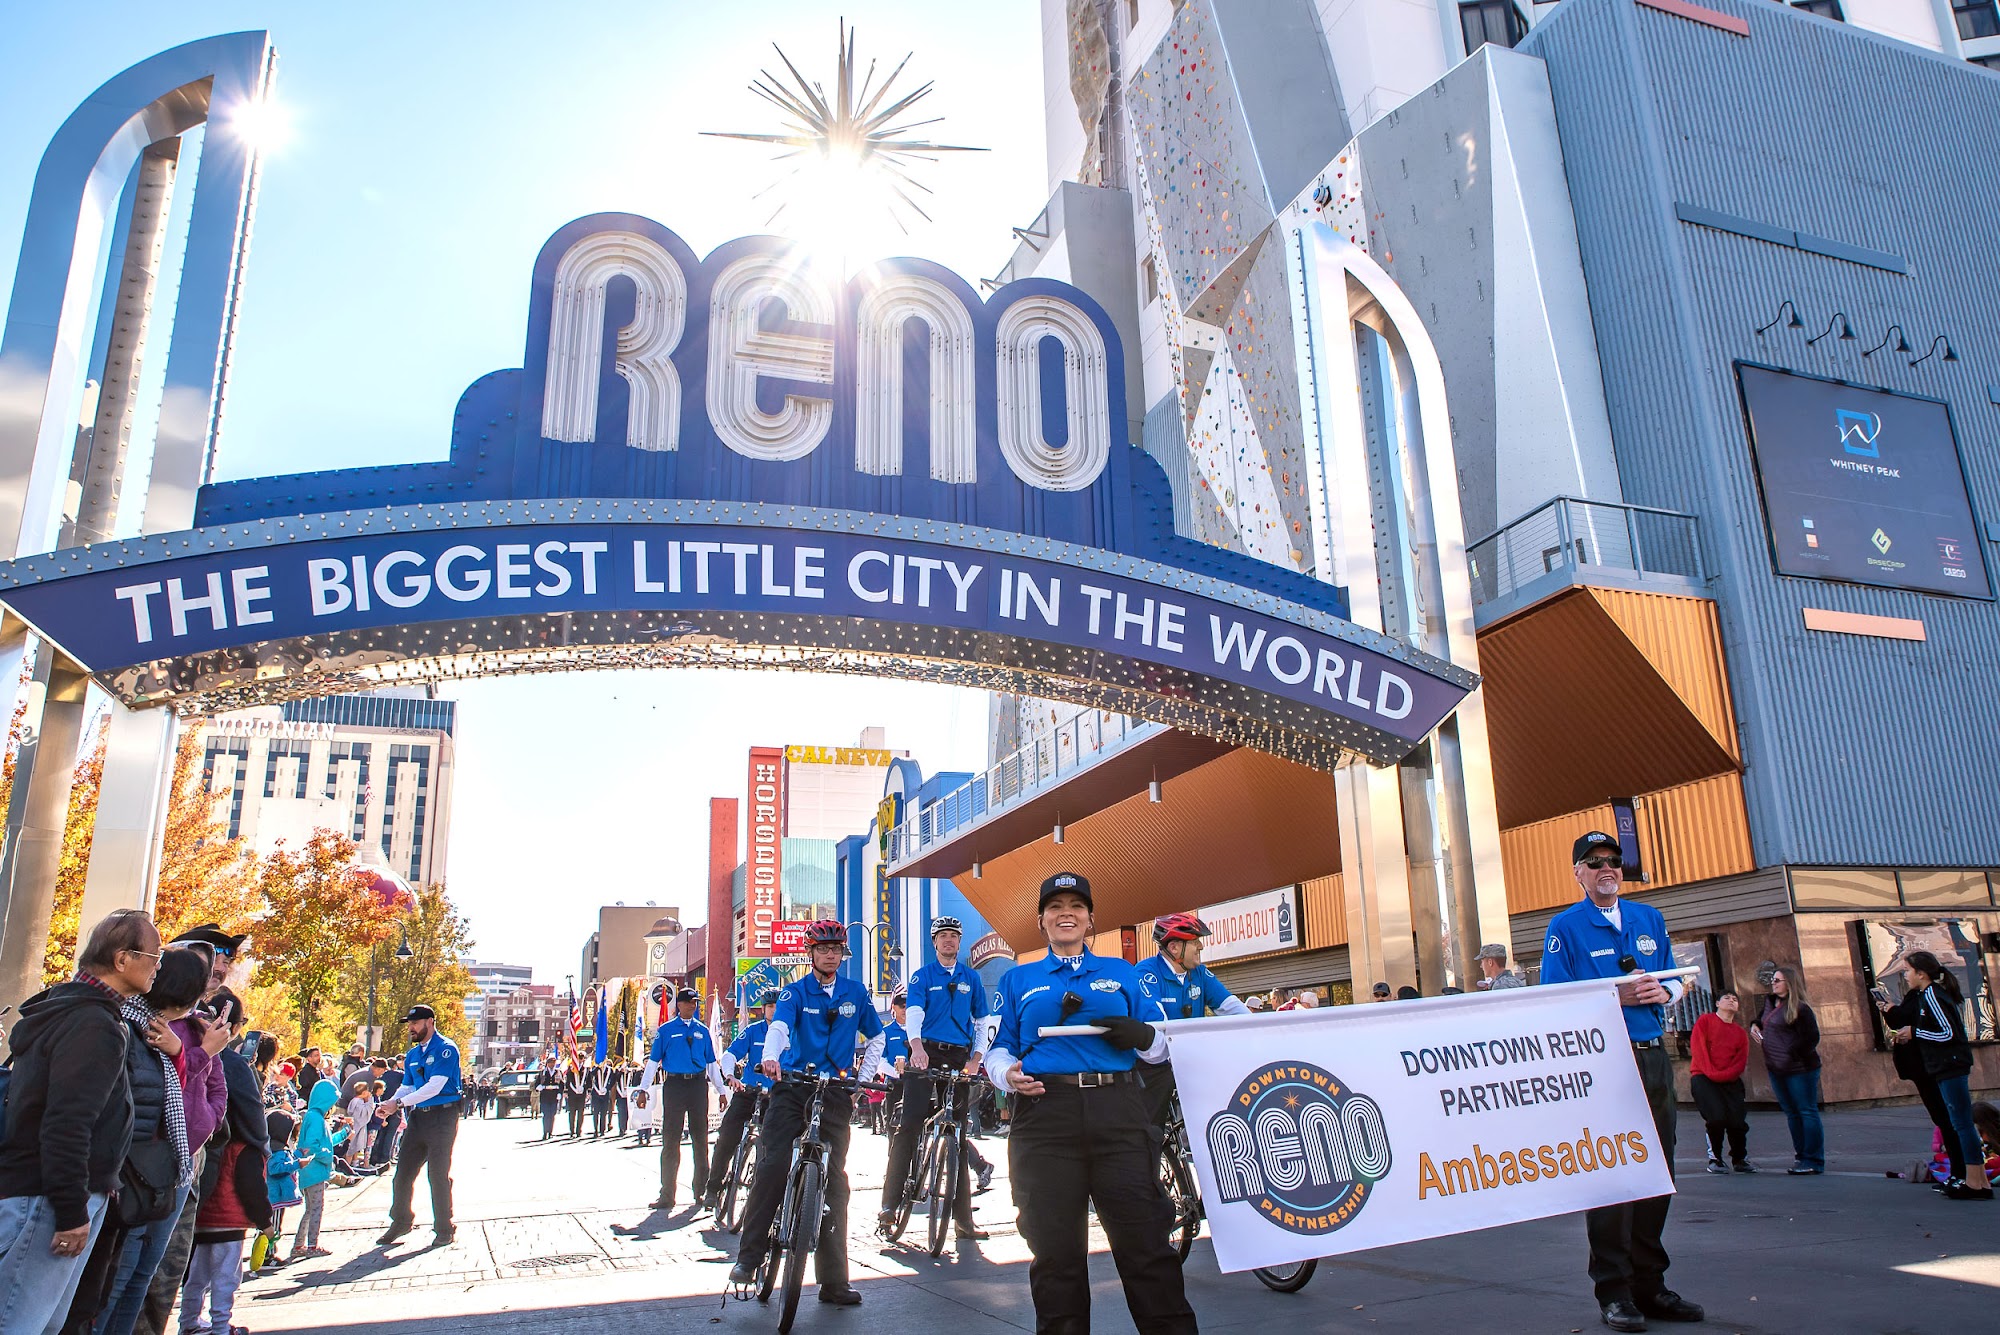 Downtown Reno Partnership